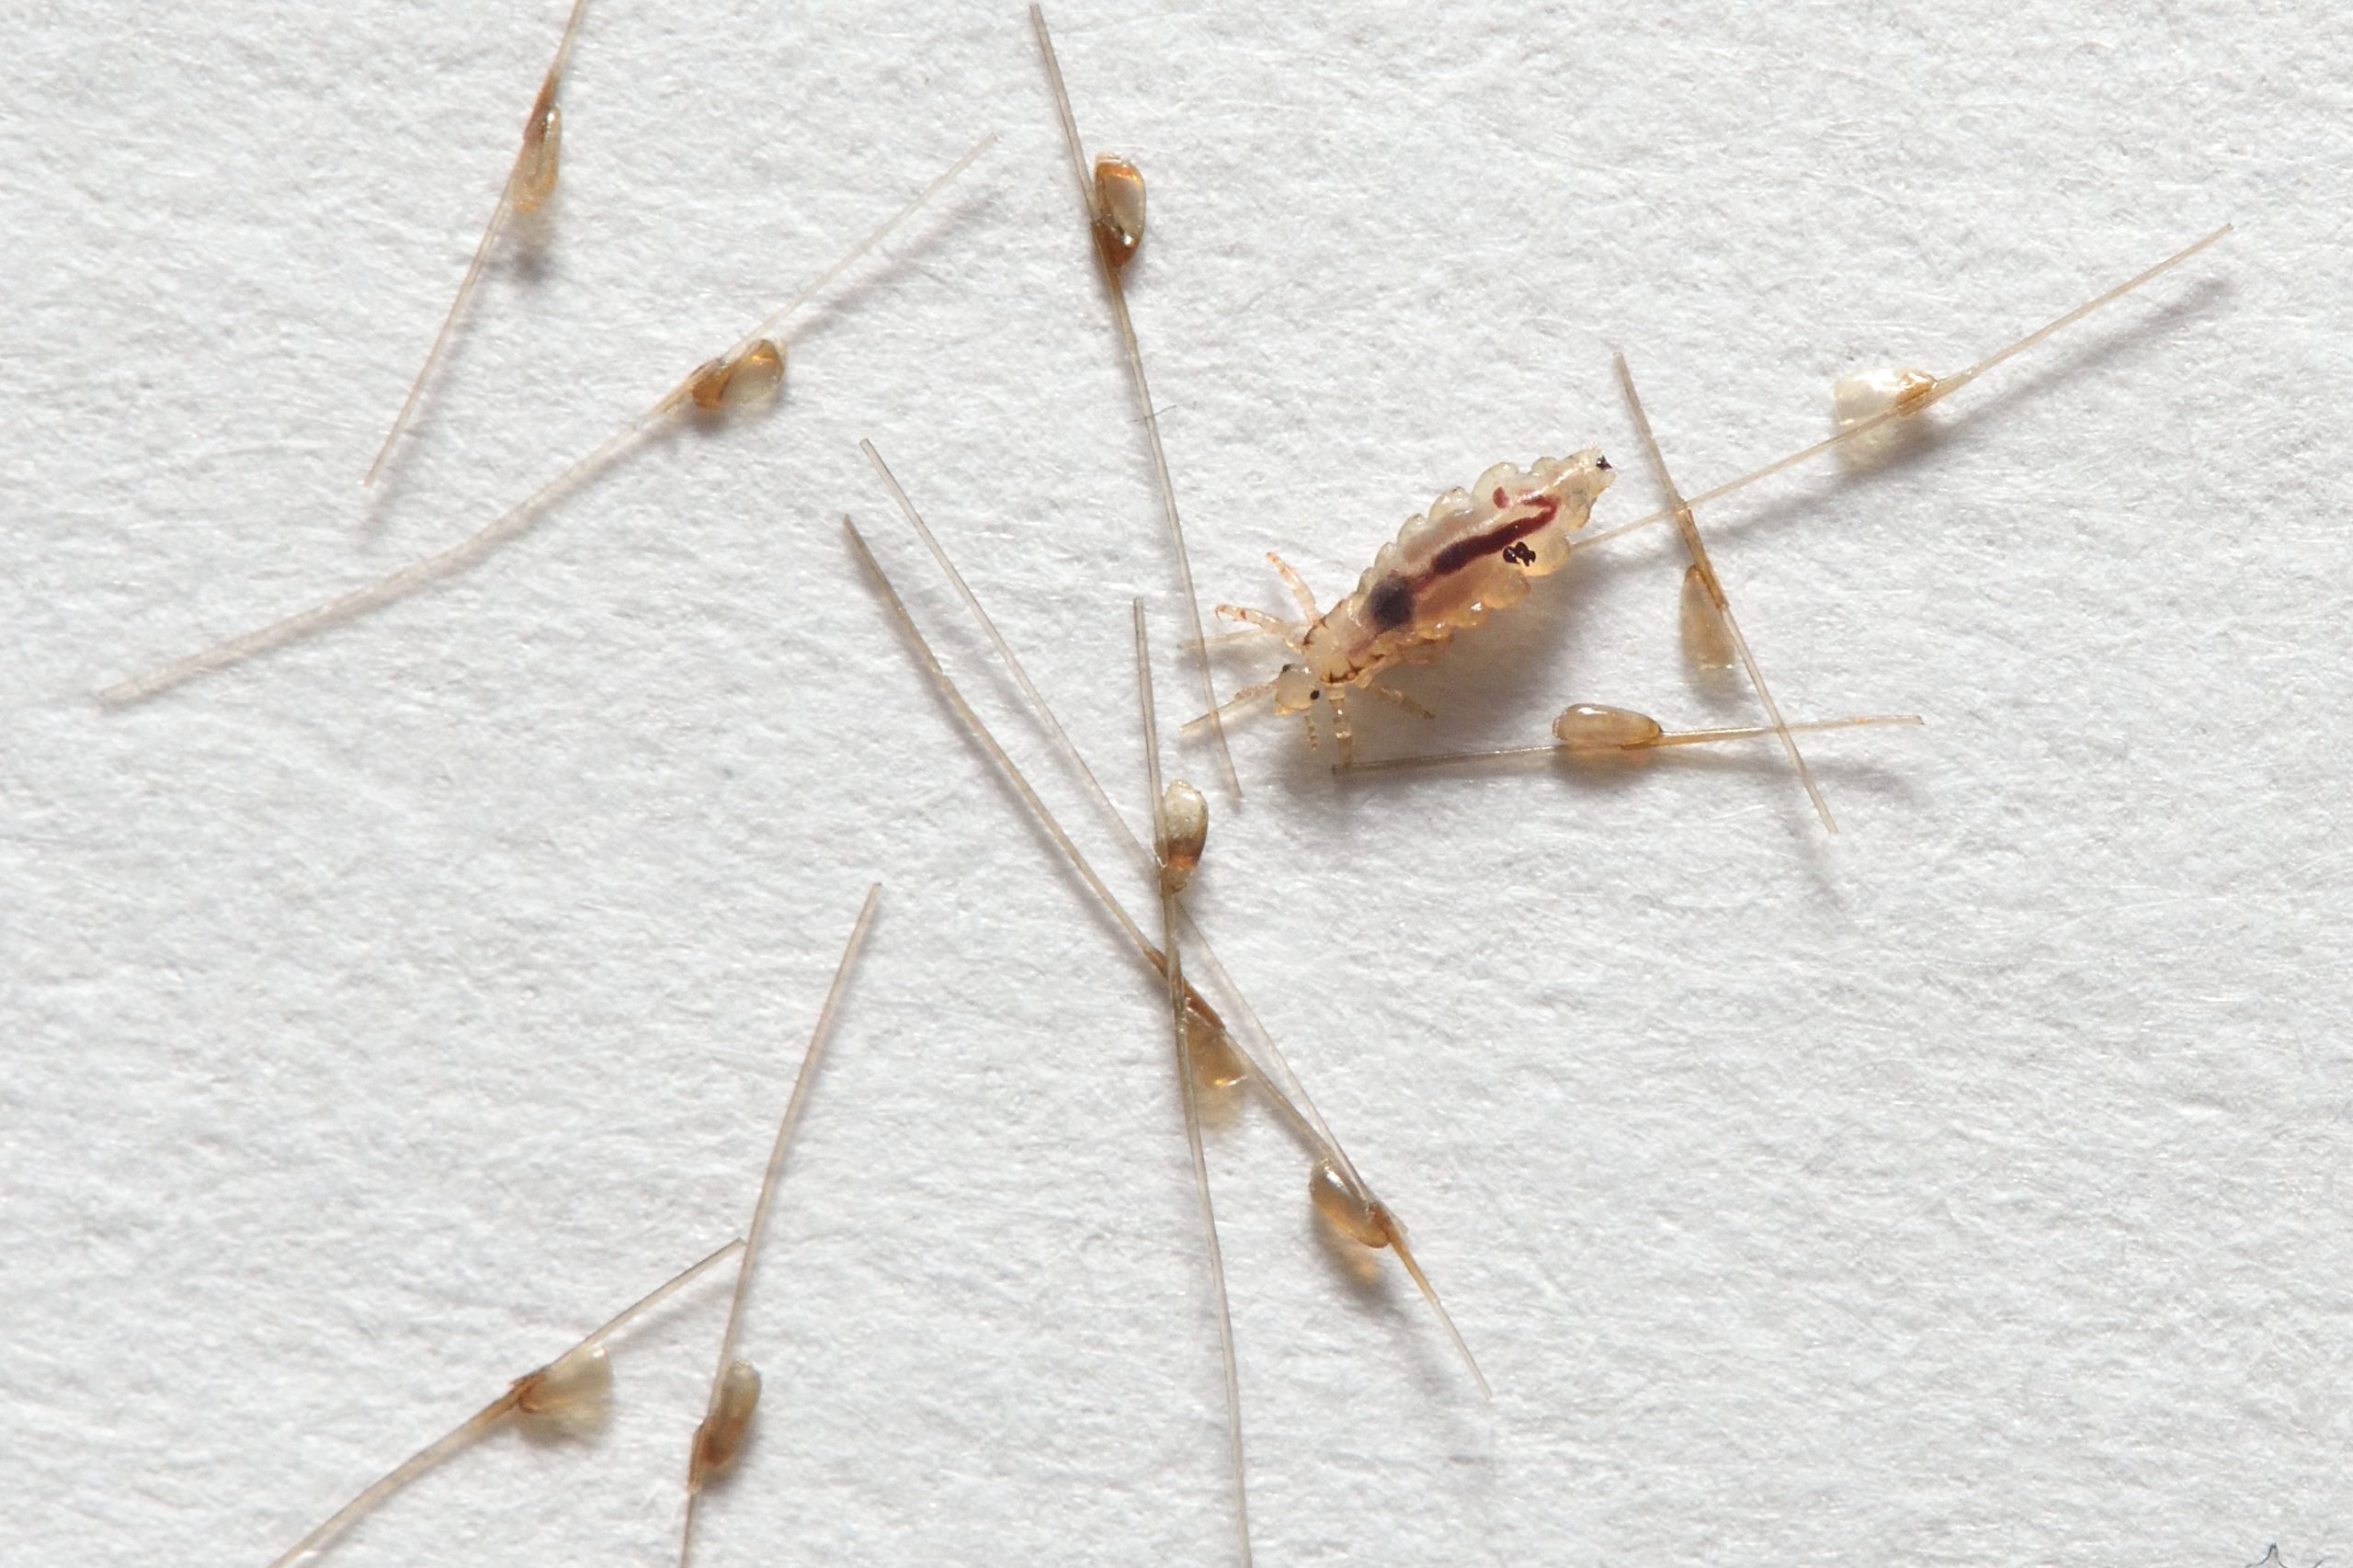 Bugs That Look Like Lice